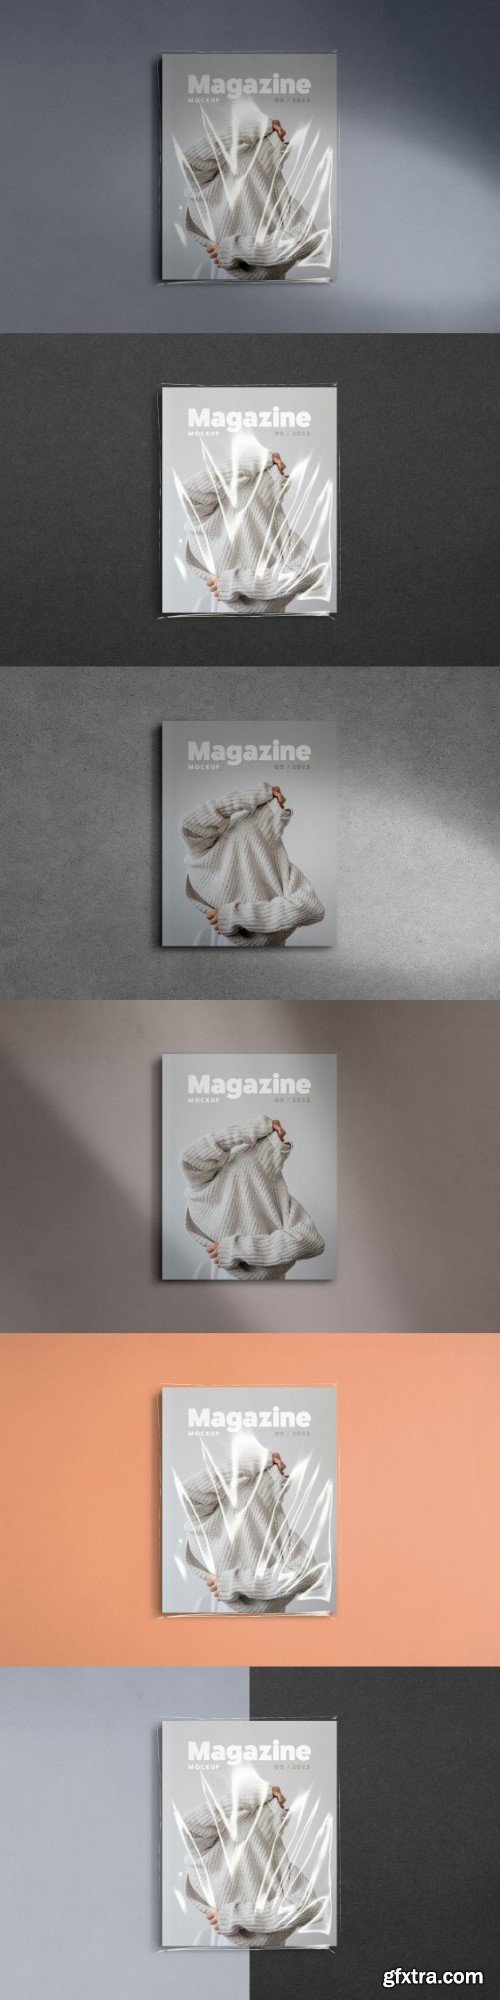 Magazine Mockup US Paper Size